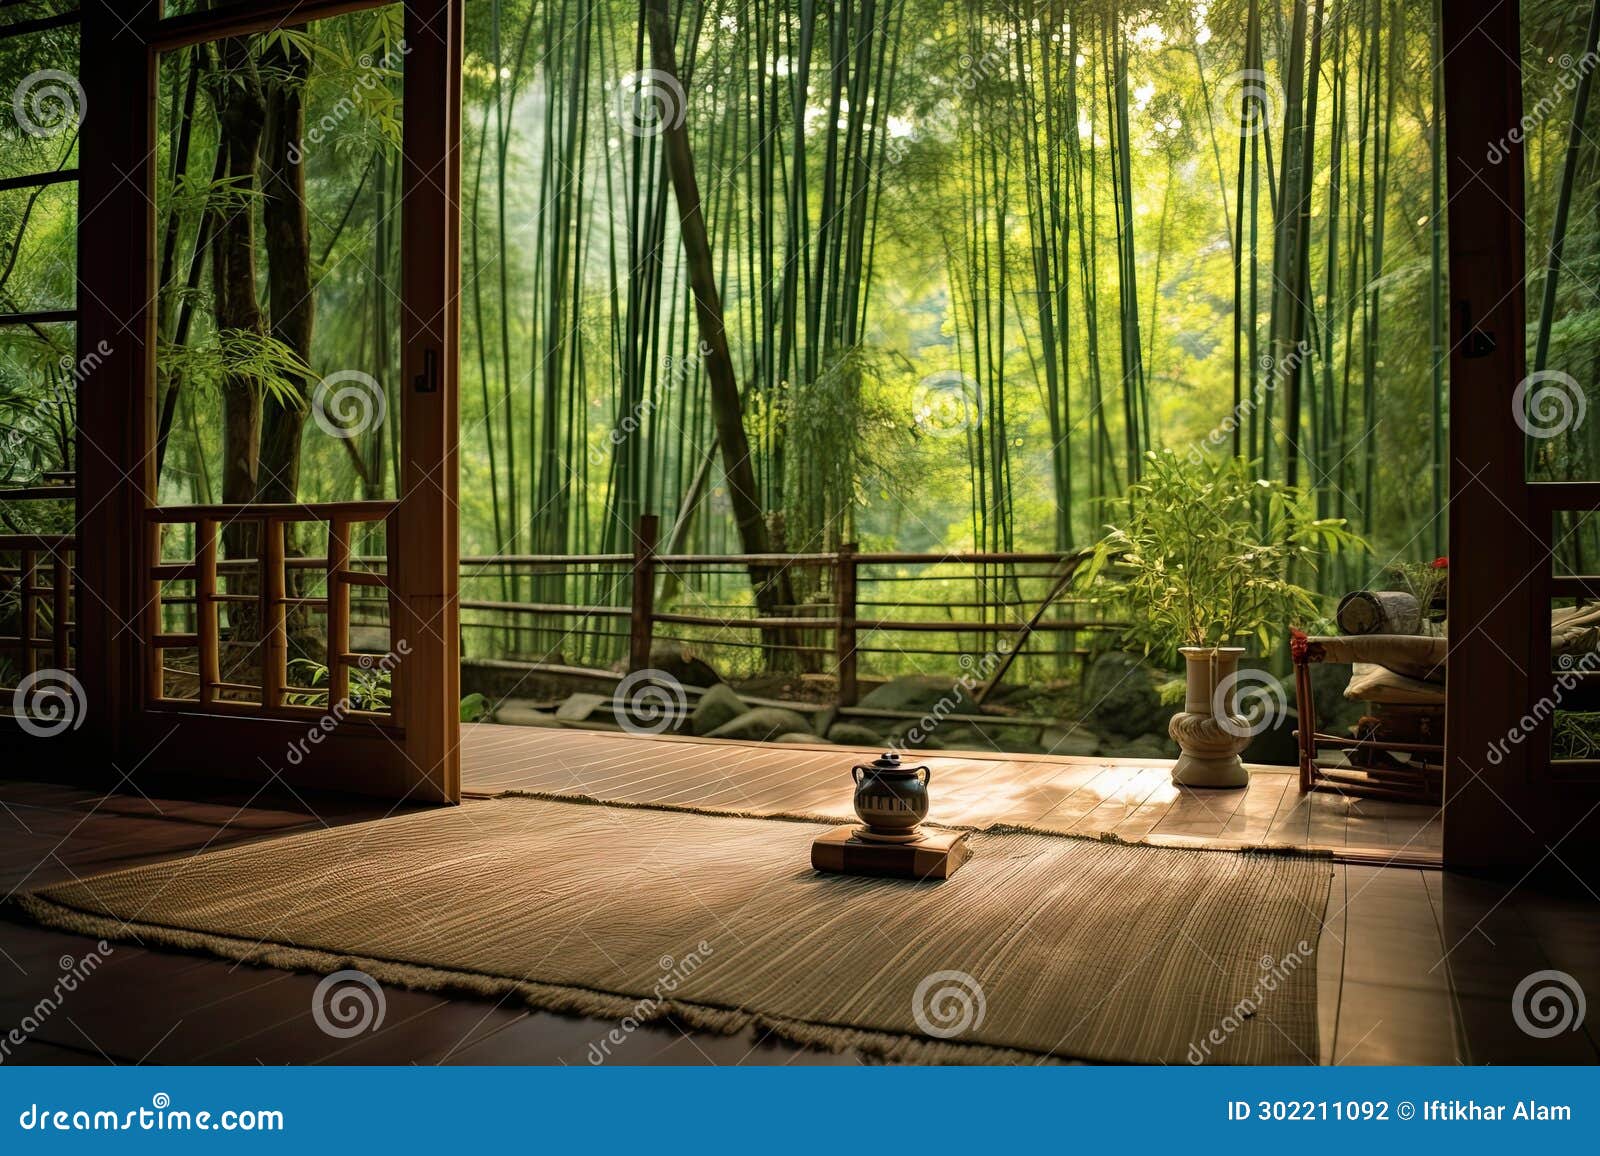 bamboo forest in the morning at arashiyama kyoto japan, ai generated